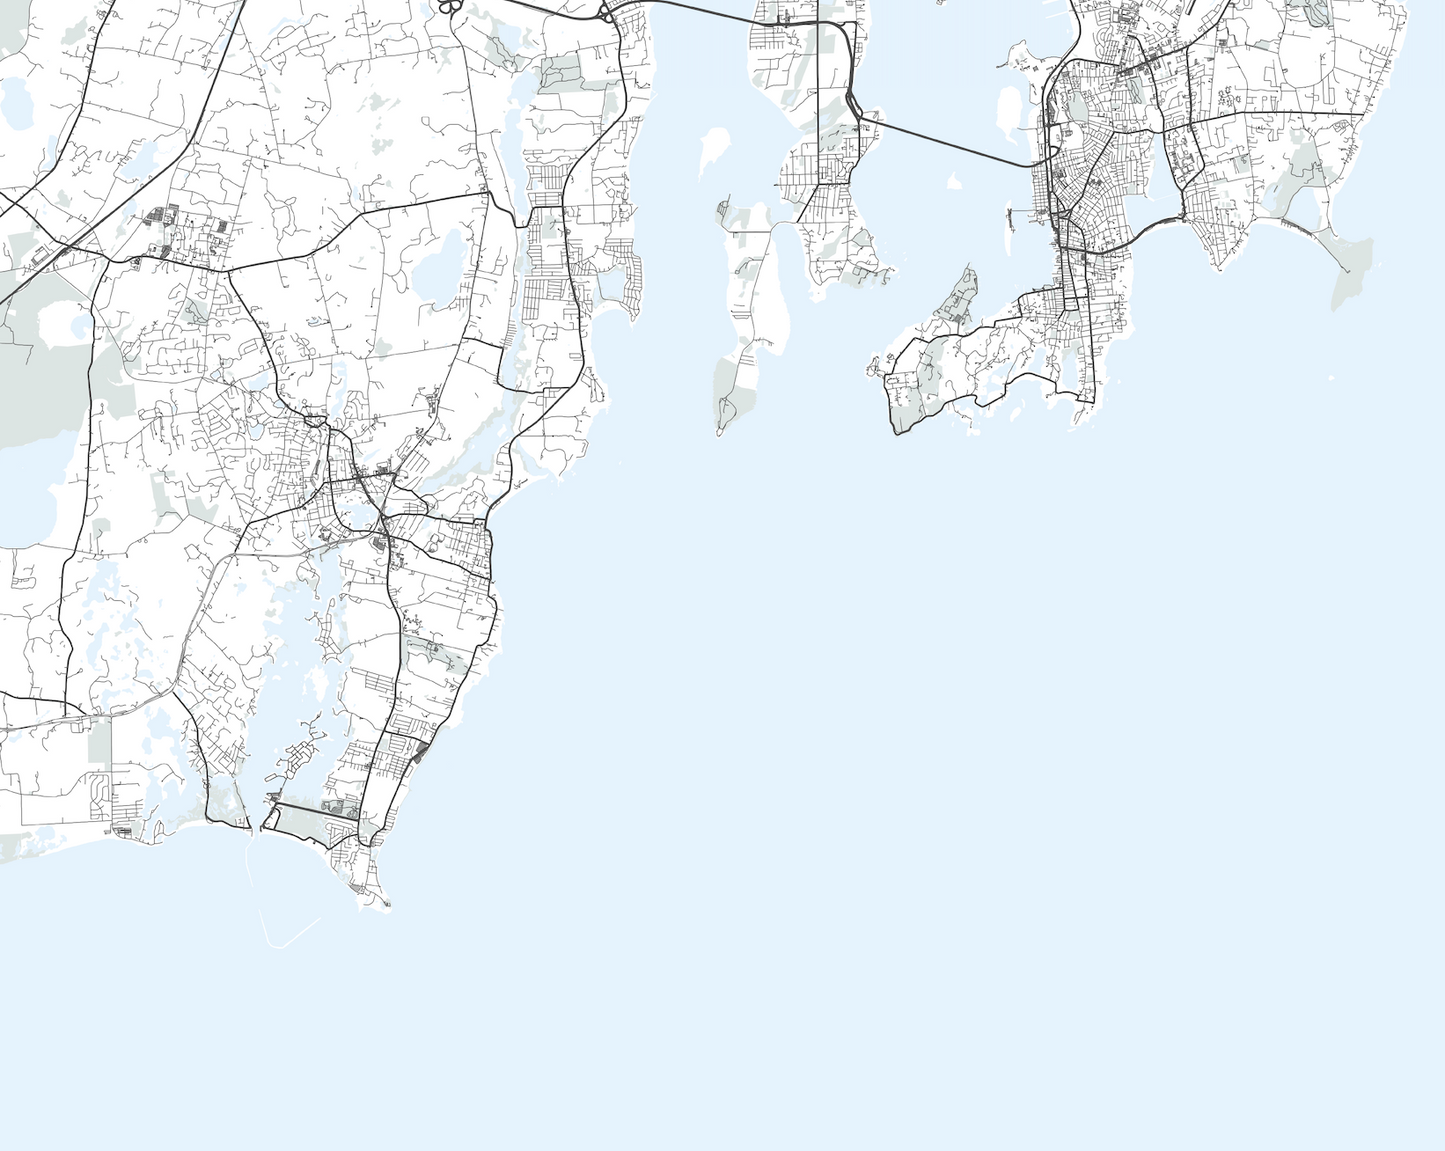 Rhode Island Coast Map Print